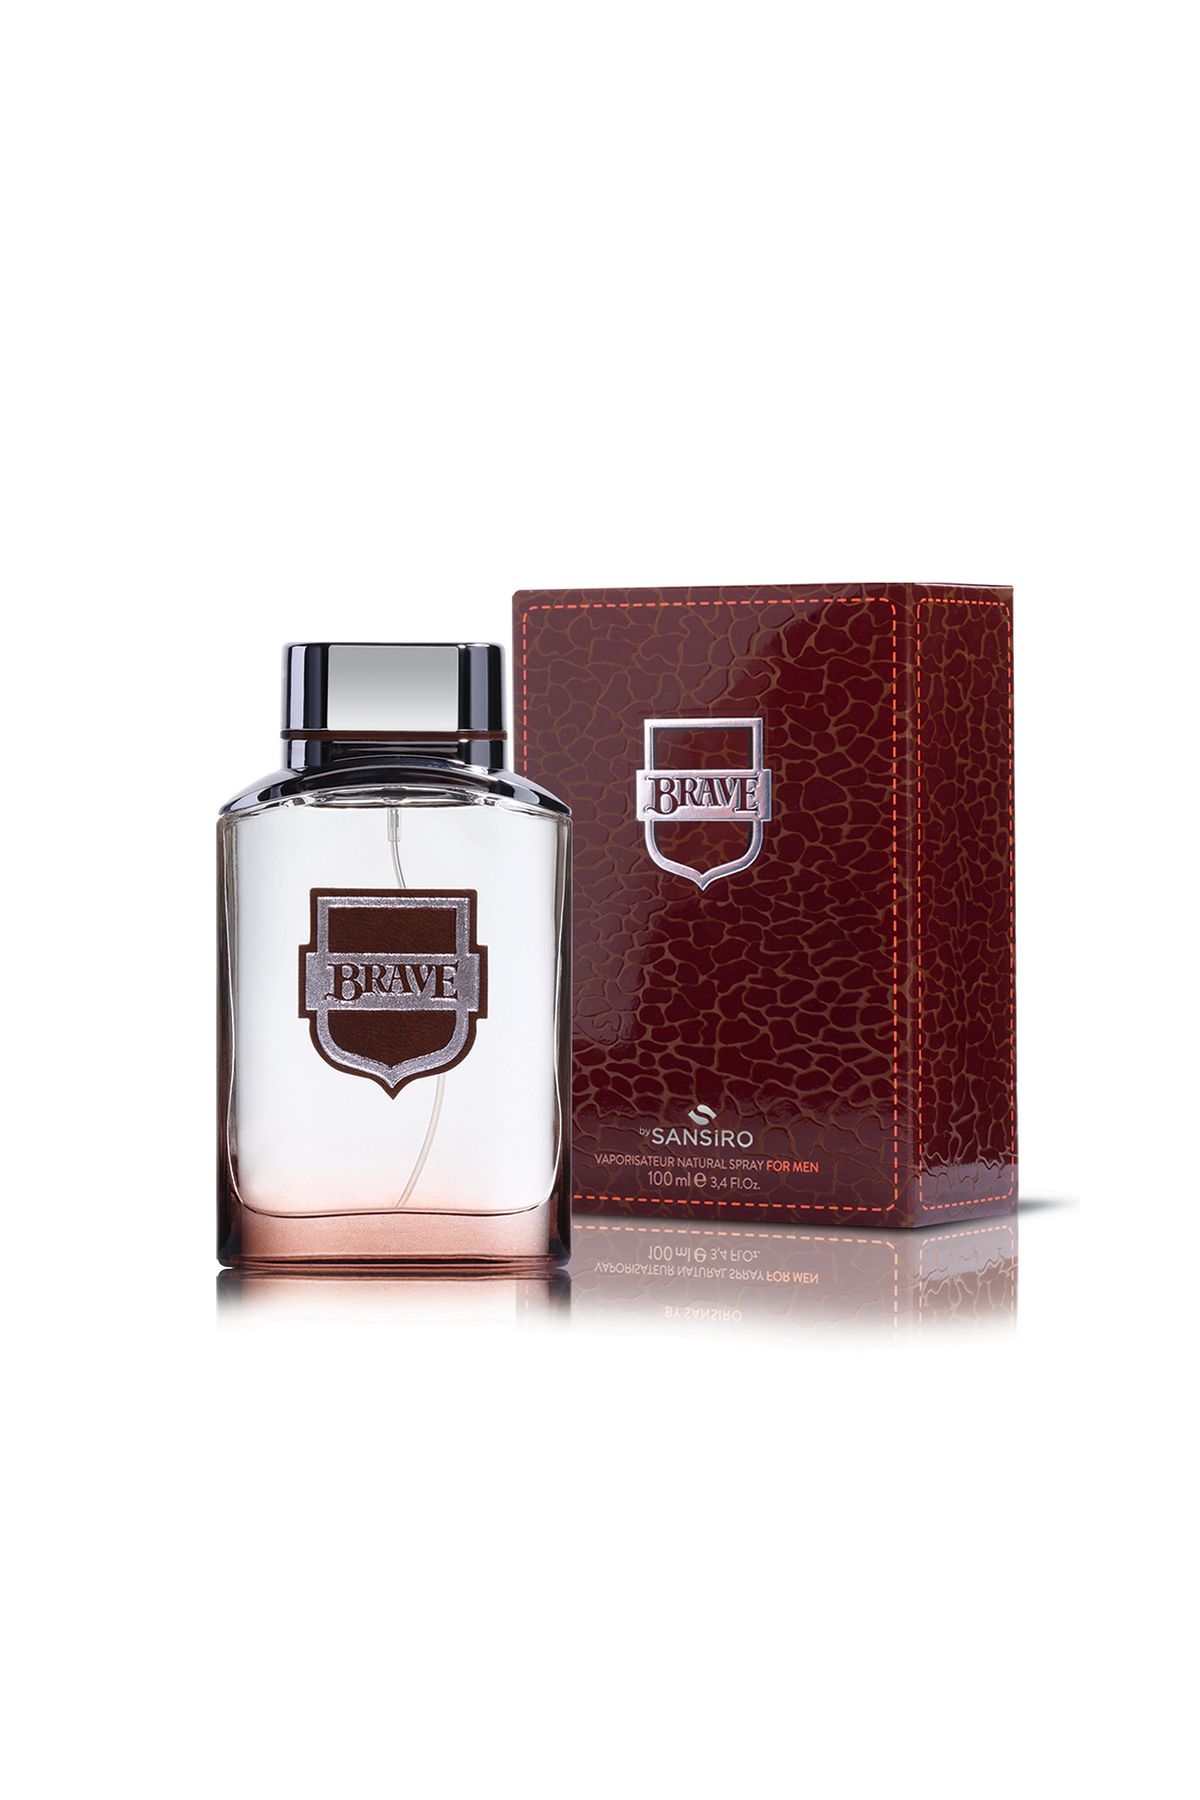 Sansiro Brave Erkek Parfüm 100 ml Edp